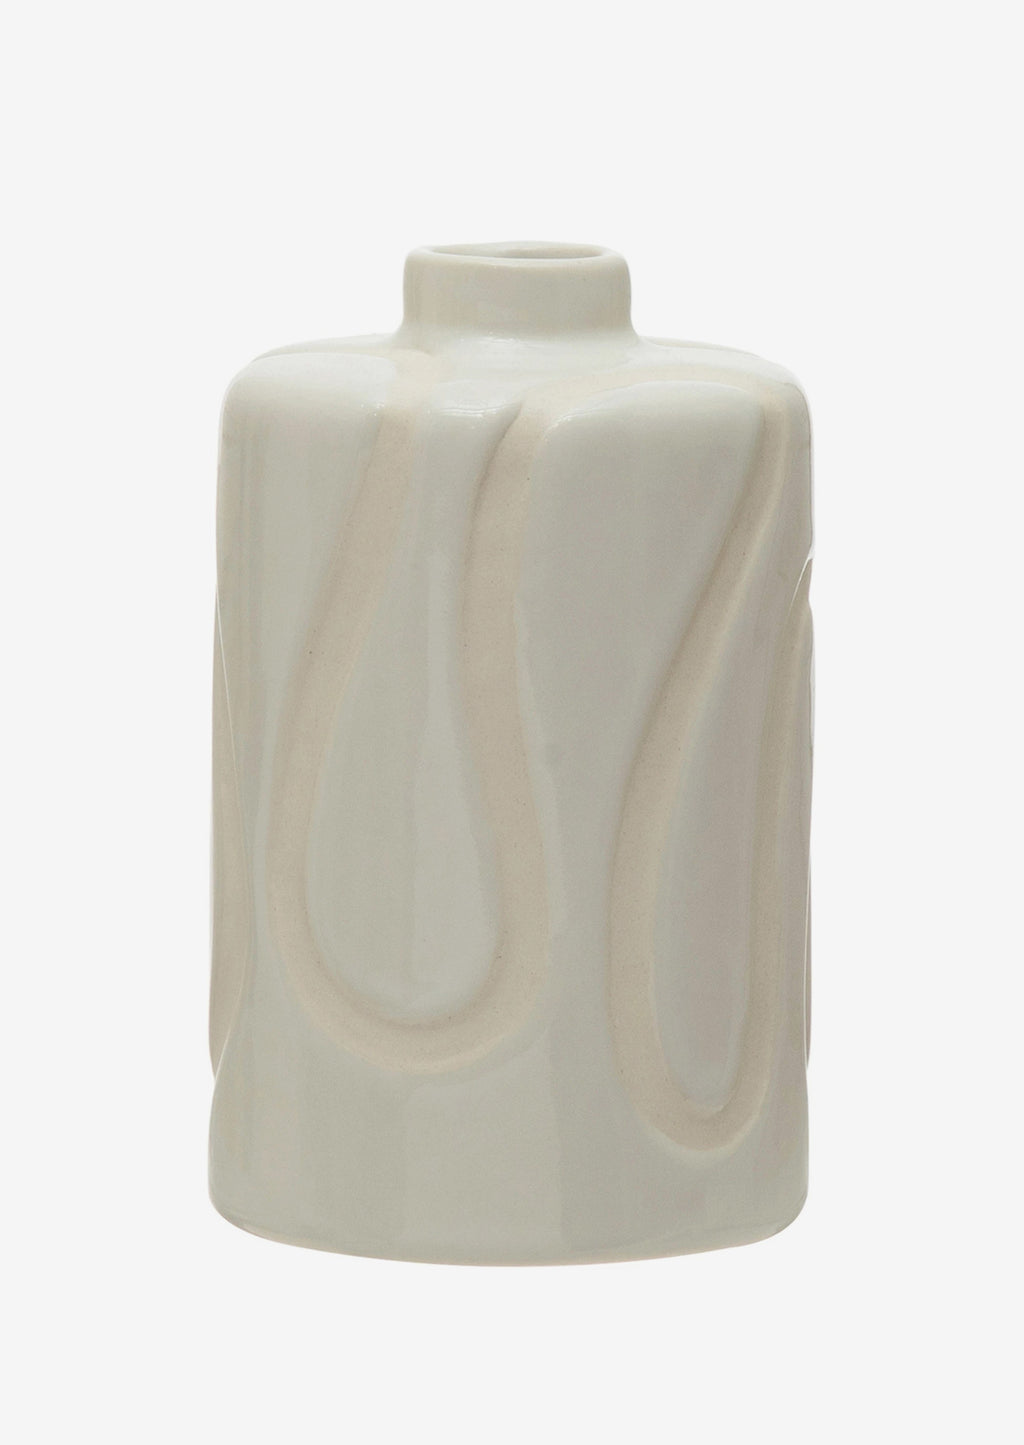 3: A glossy white ceramic vase with subtle cream squiggle design.